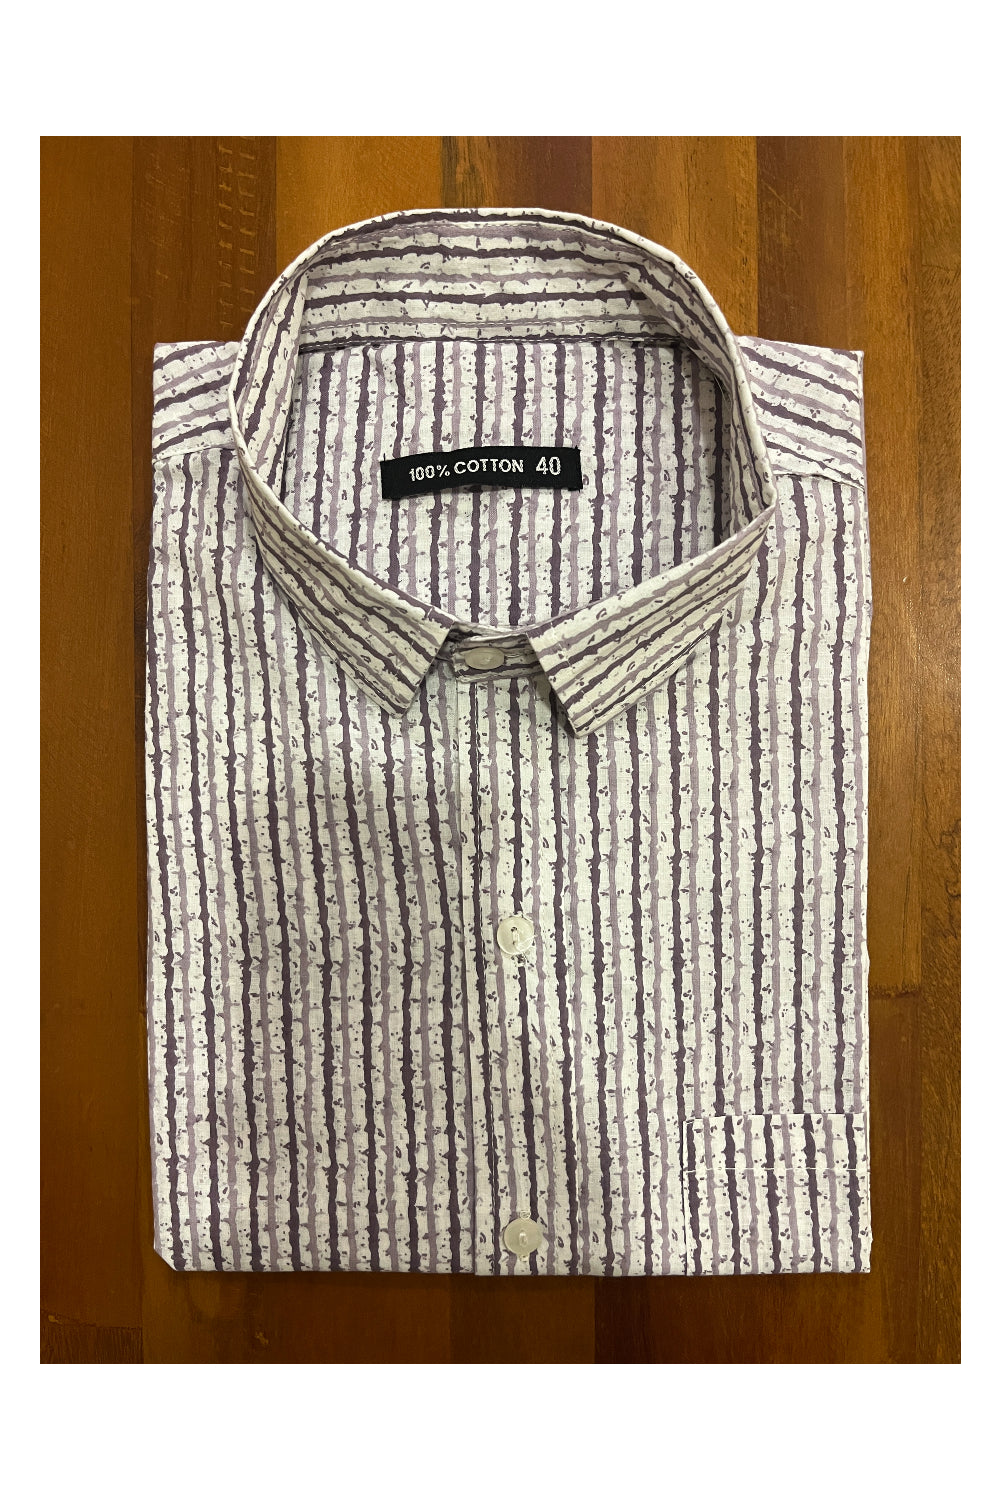 Southloom Jaipur Cotton White Grey Hand Block Printed Shirt (Half Sleeves)